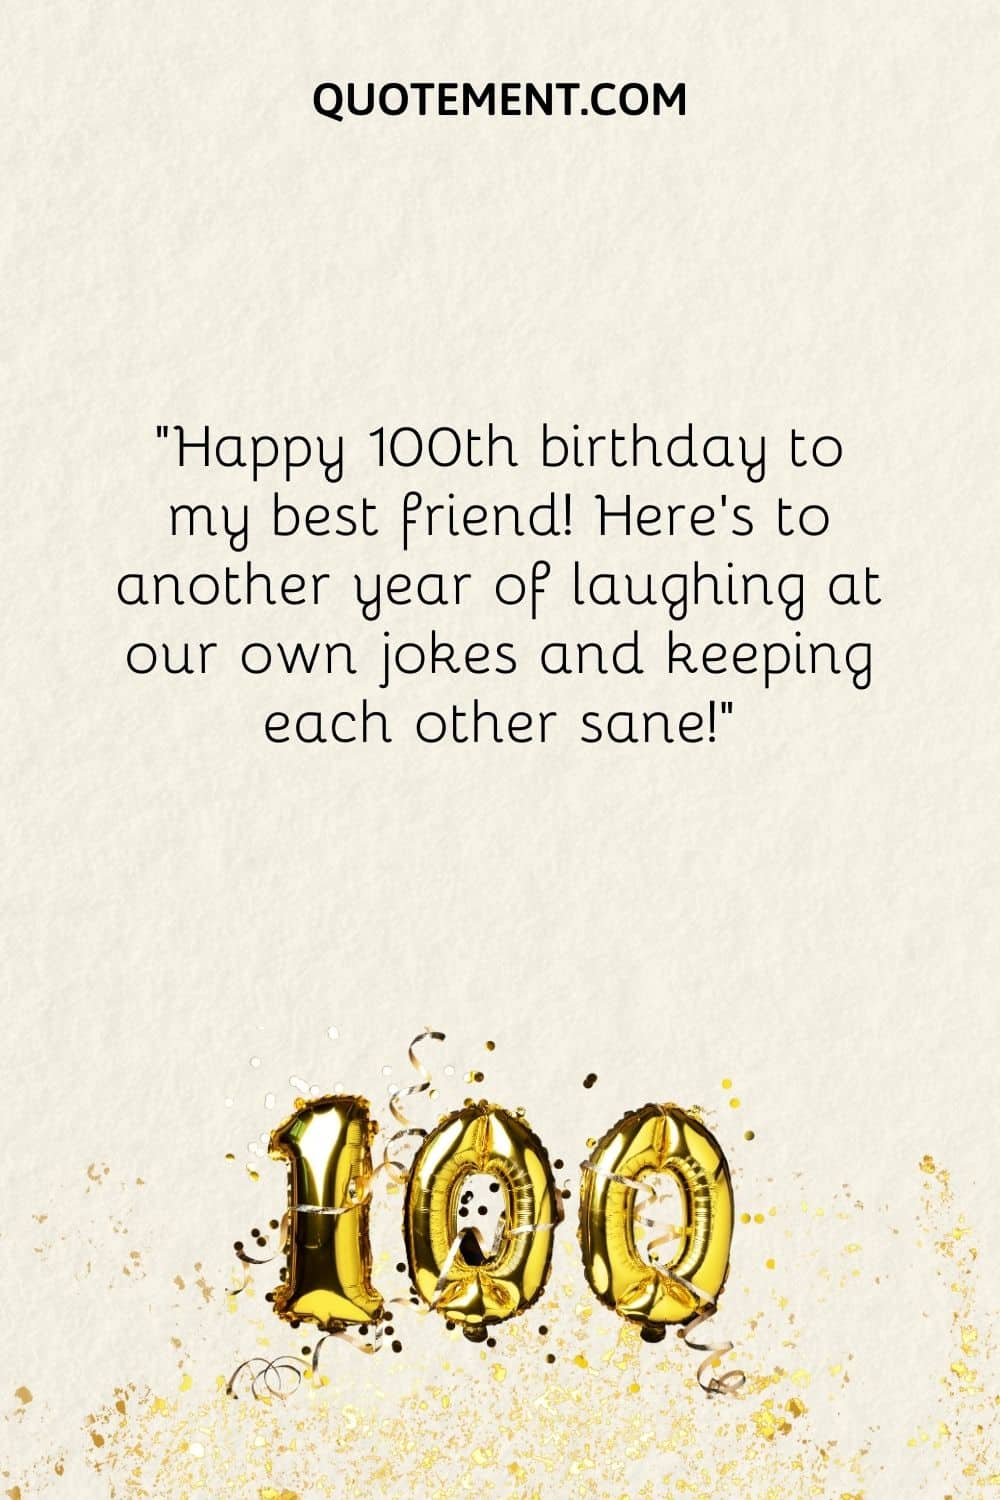 Happy 100th birthday to my best friend